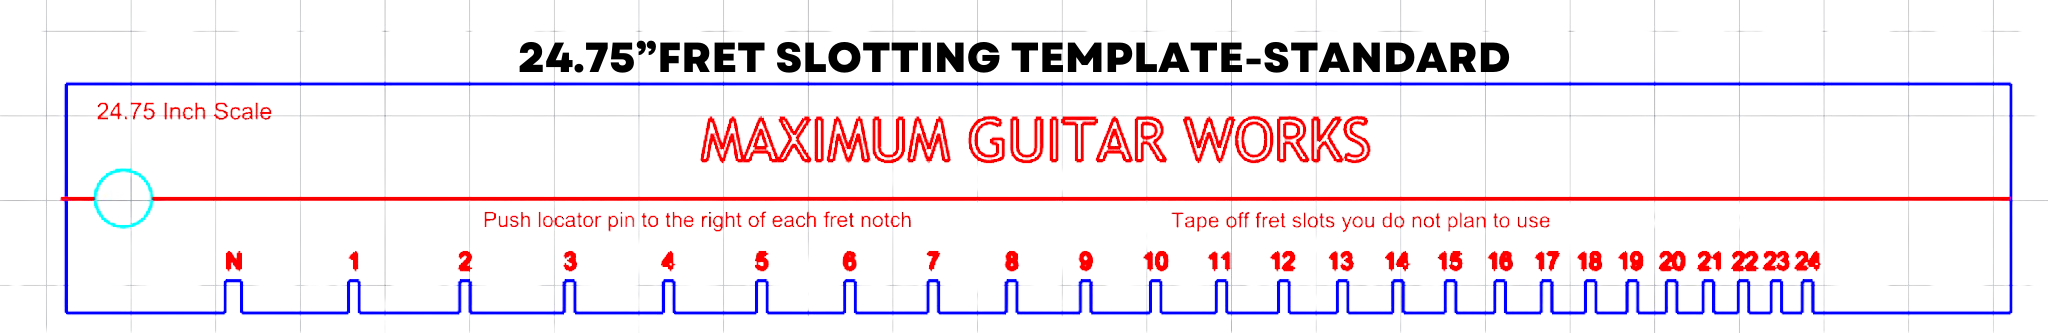 Maximum Guitar Works Fret Slotting Templates